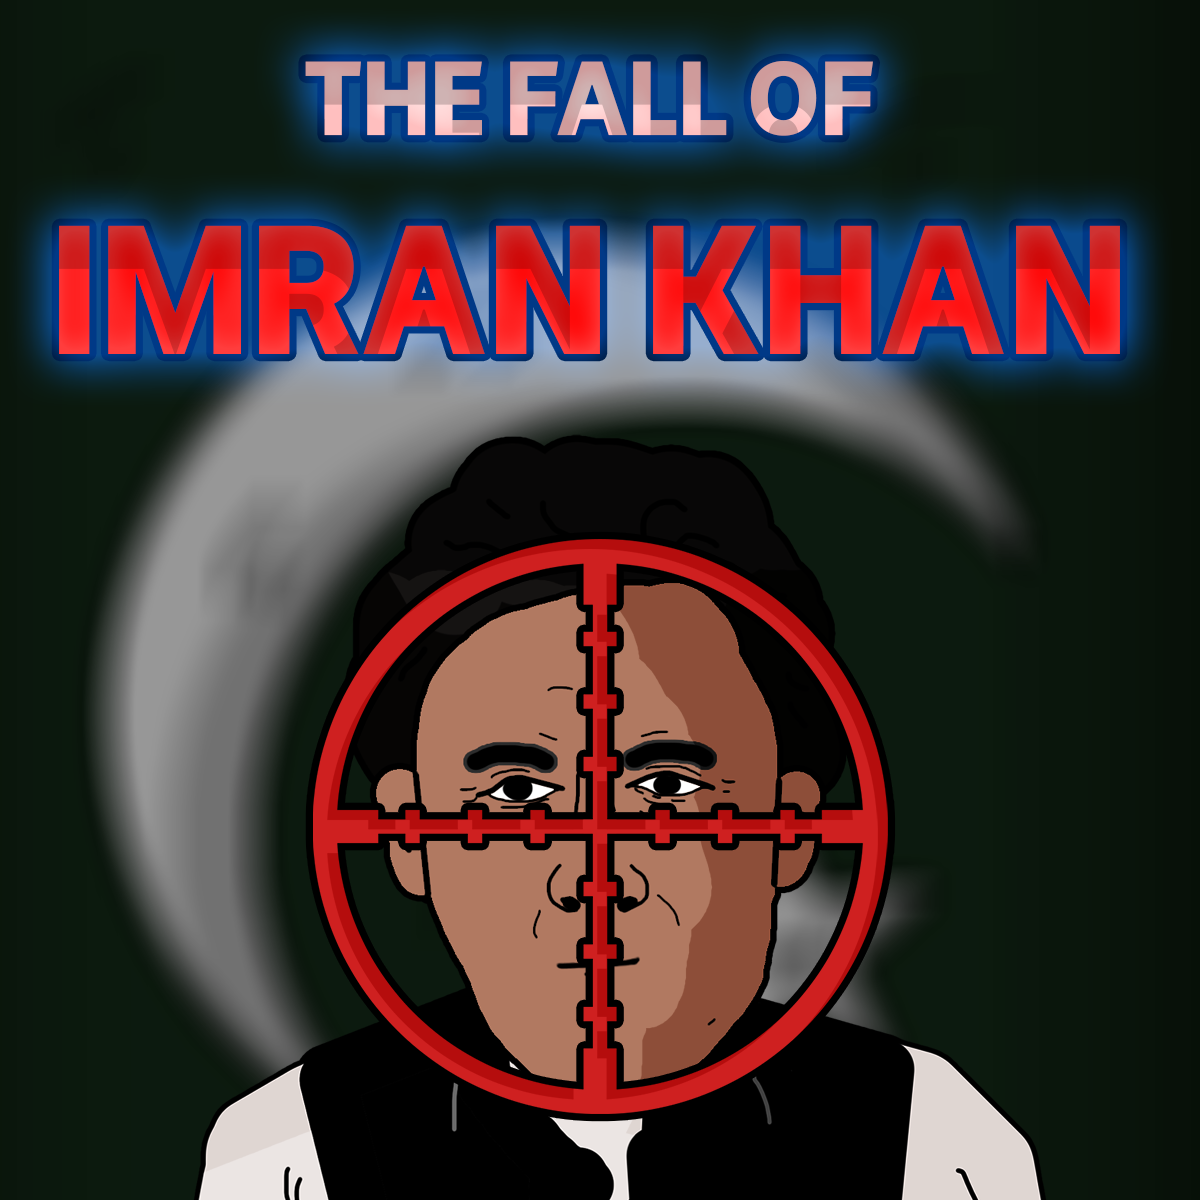 Why Imran Khan's Pakistan collapsed